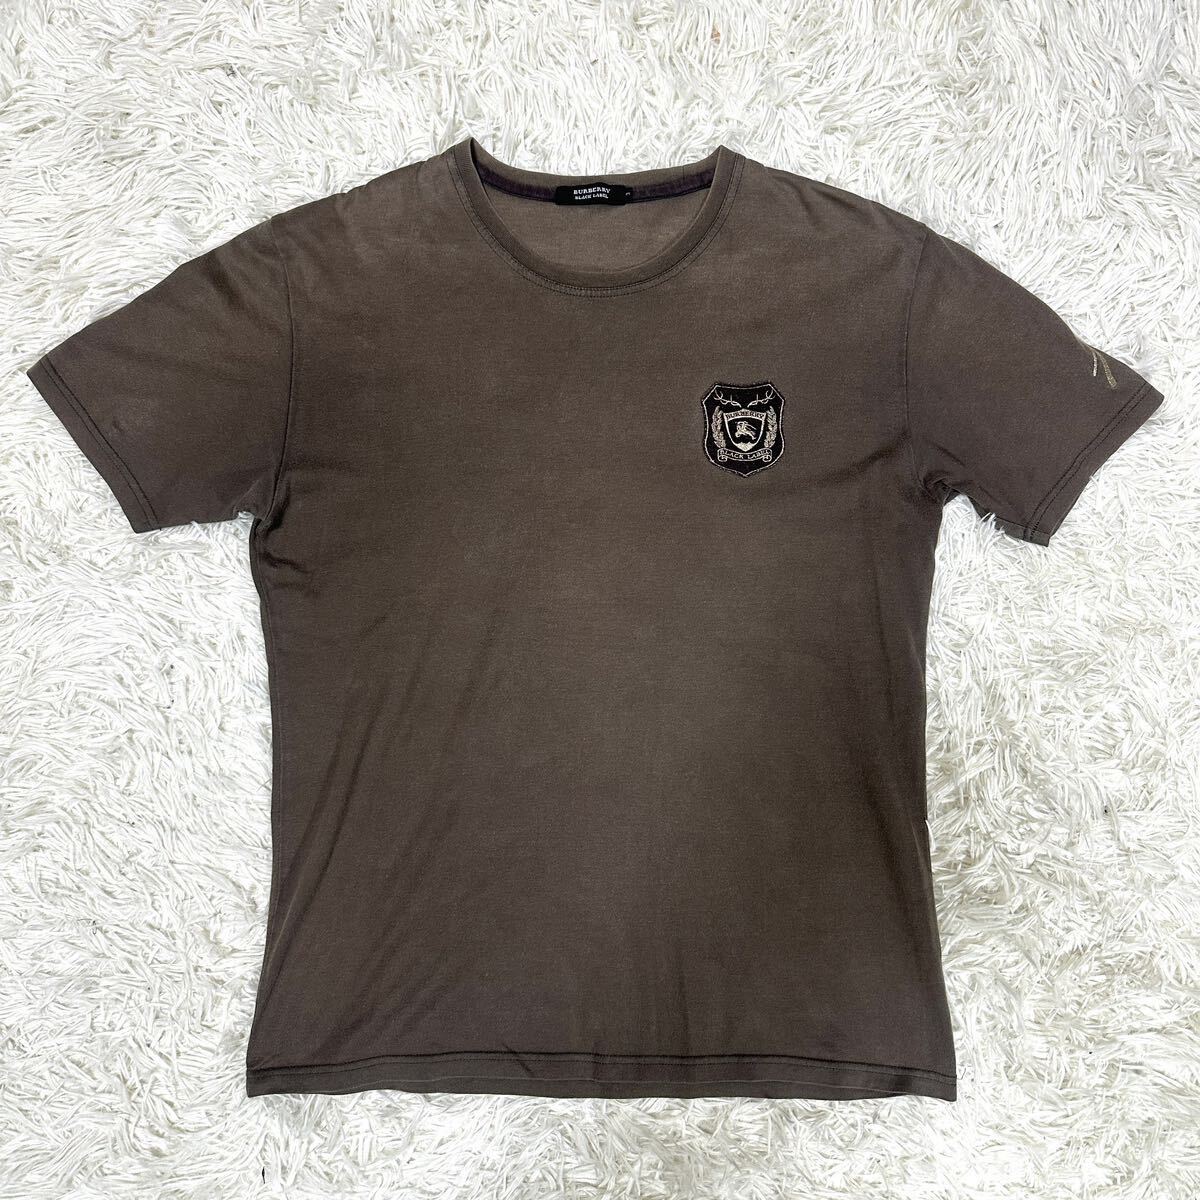 BURBERRY BLACK LABEL Burberry Black Label short sleeves T-shirt hose Logo badge Brown tea color size 3